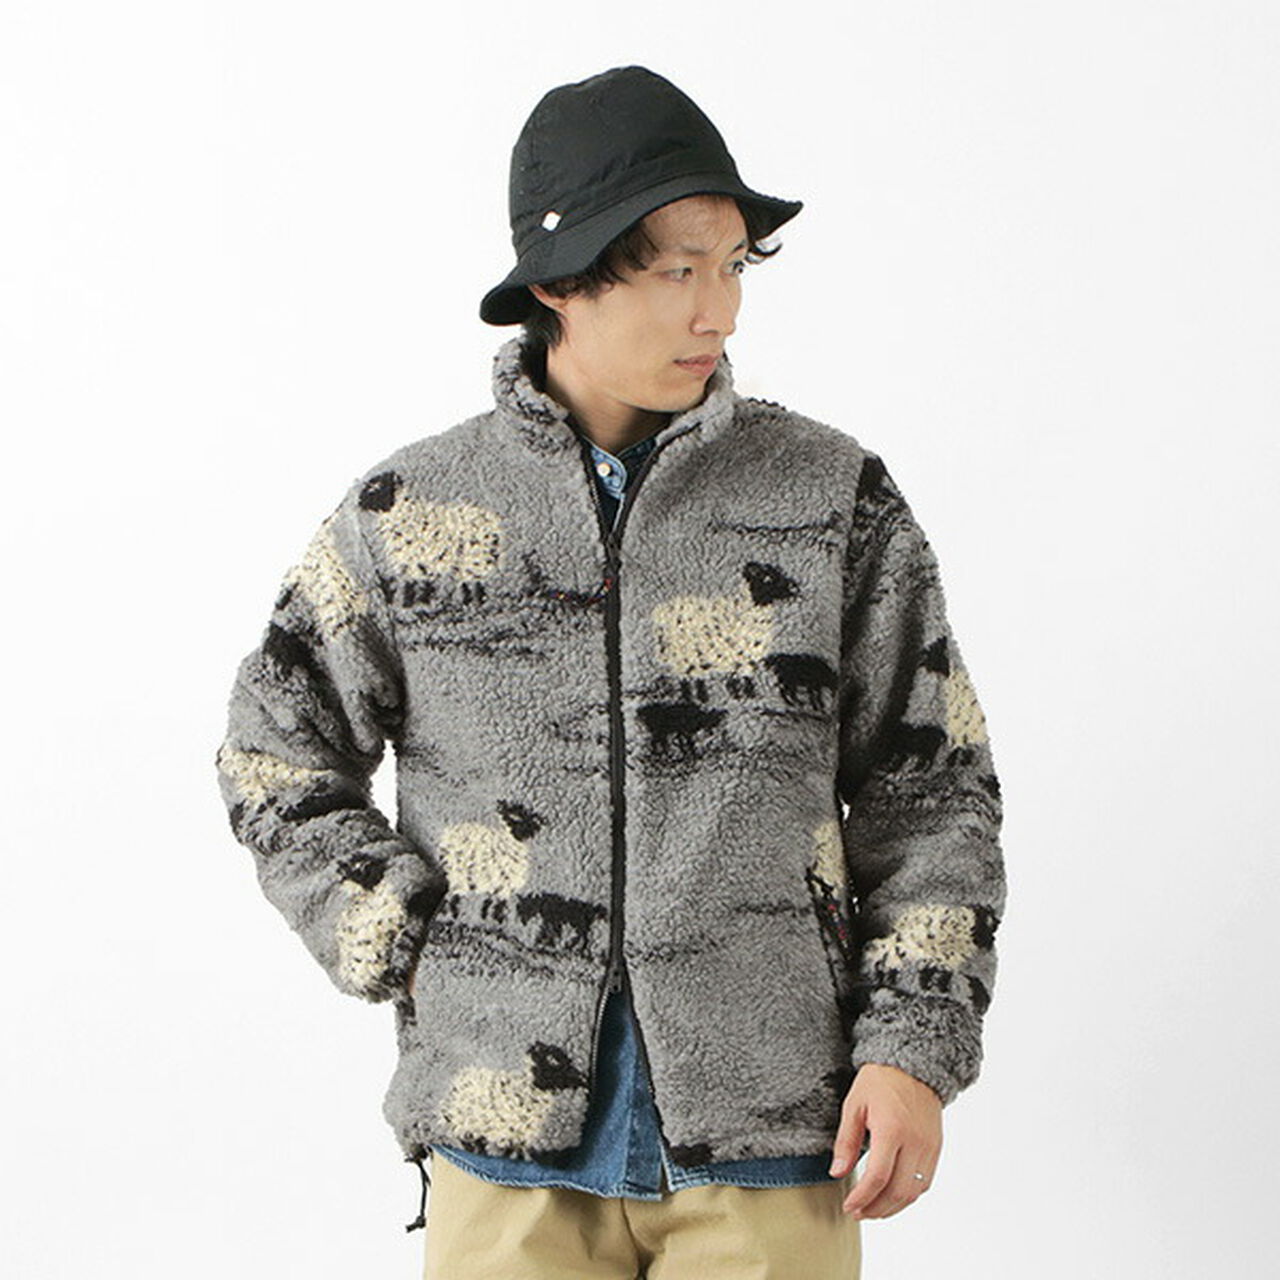 Jacquard Woven Boa Fell Jacket,Grey_SheepLamb, large image number 0